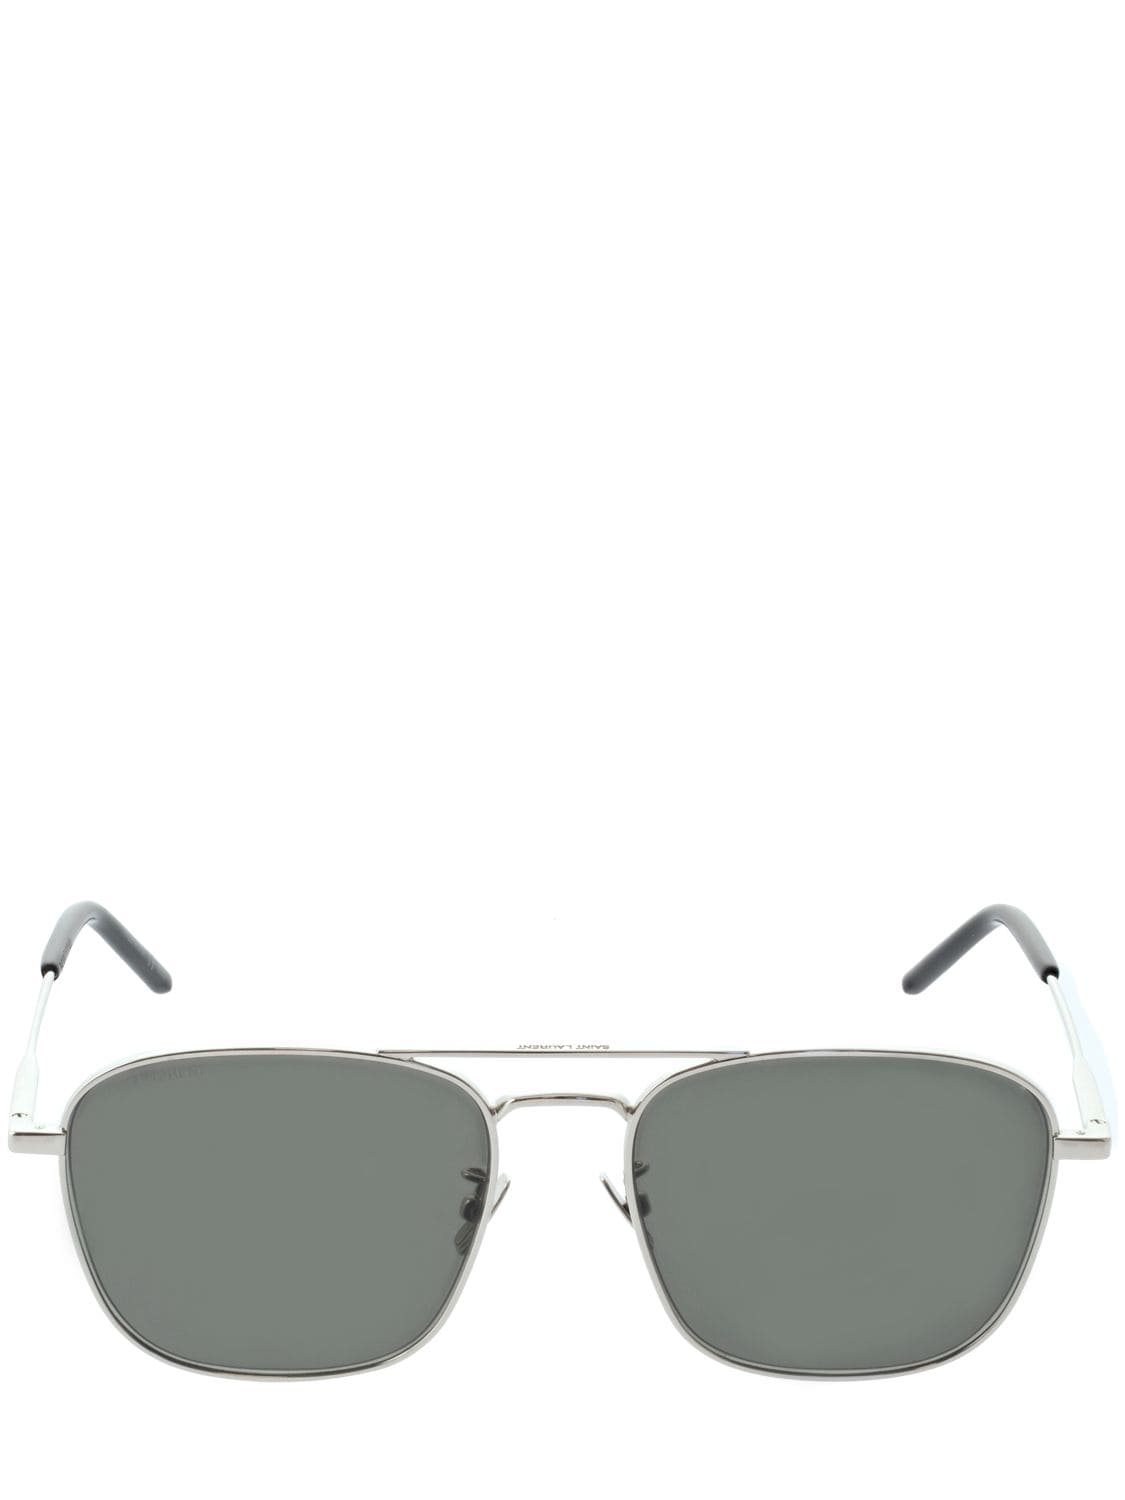 Saint Laurent Sl 309 Round Metal Sunglasses In Silver | ModeSens